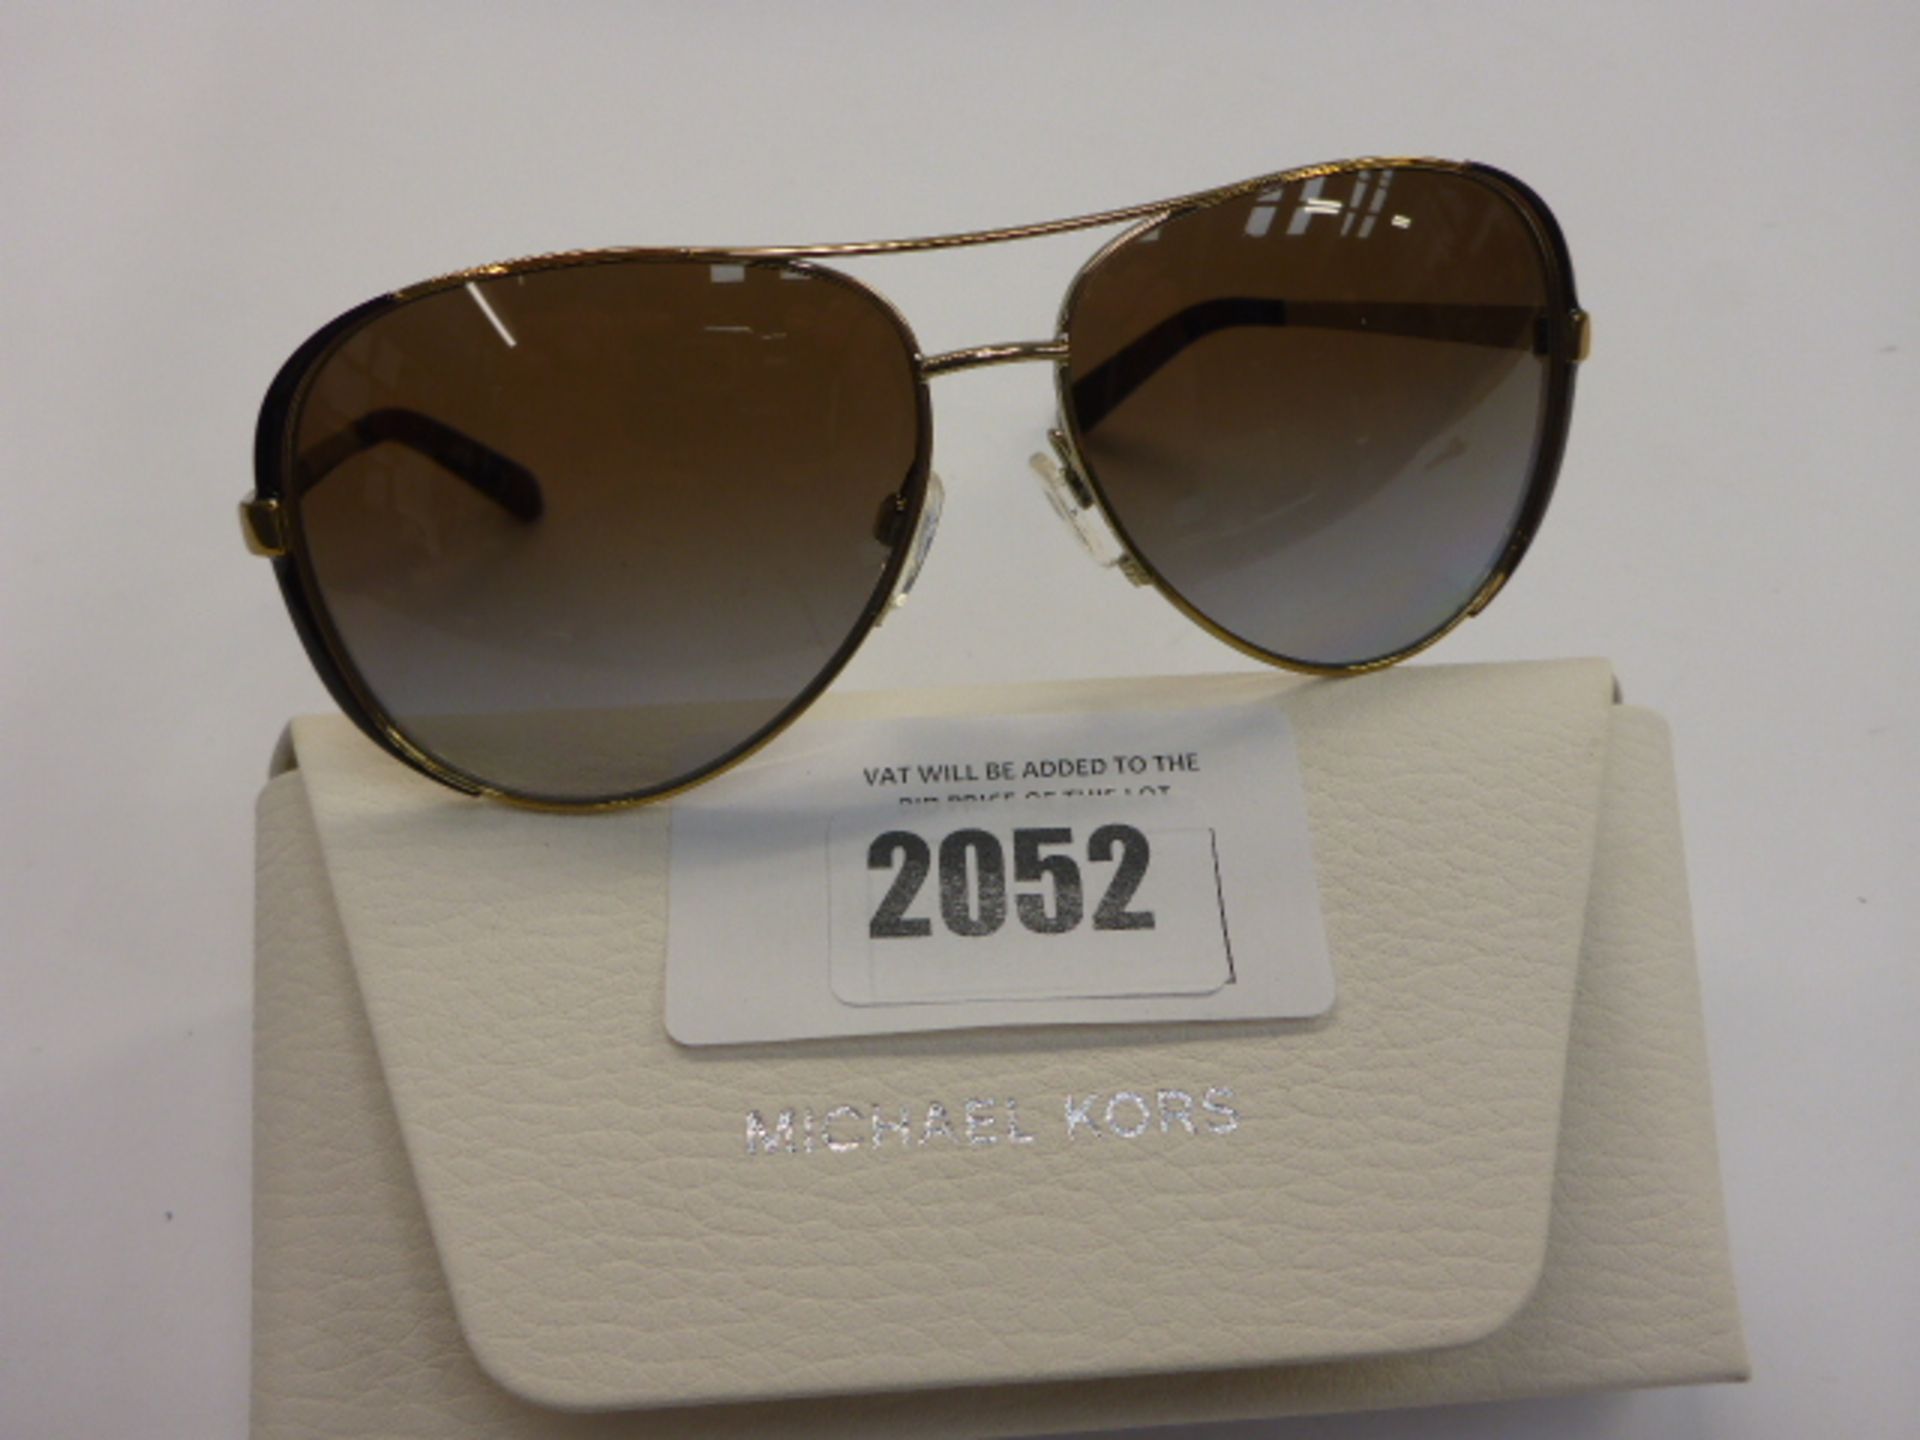 Michael Kors MK5004 Chelsea ladies sunglasses